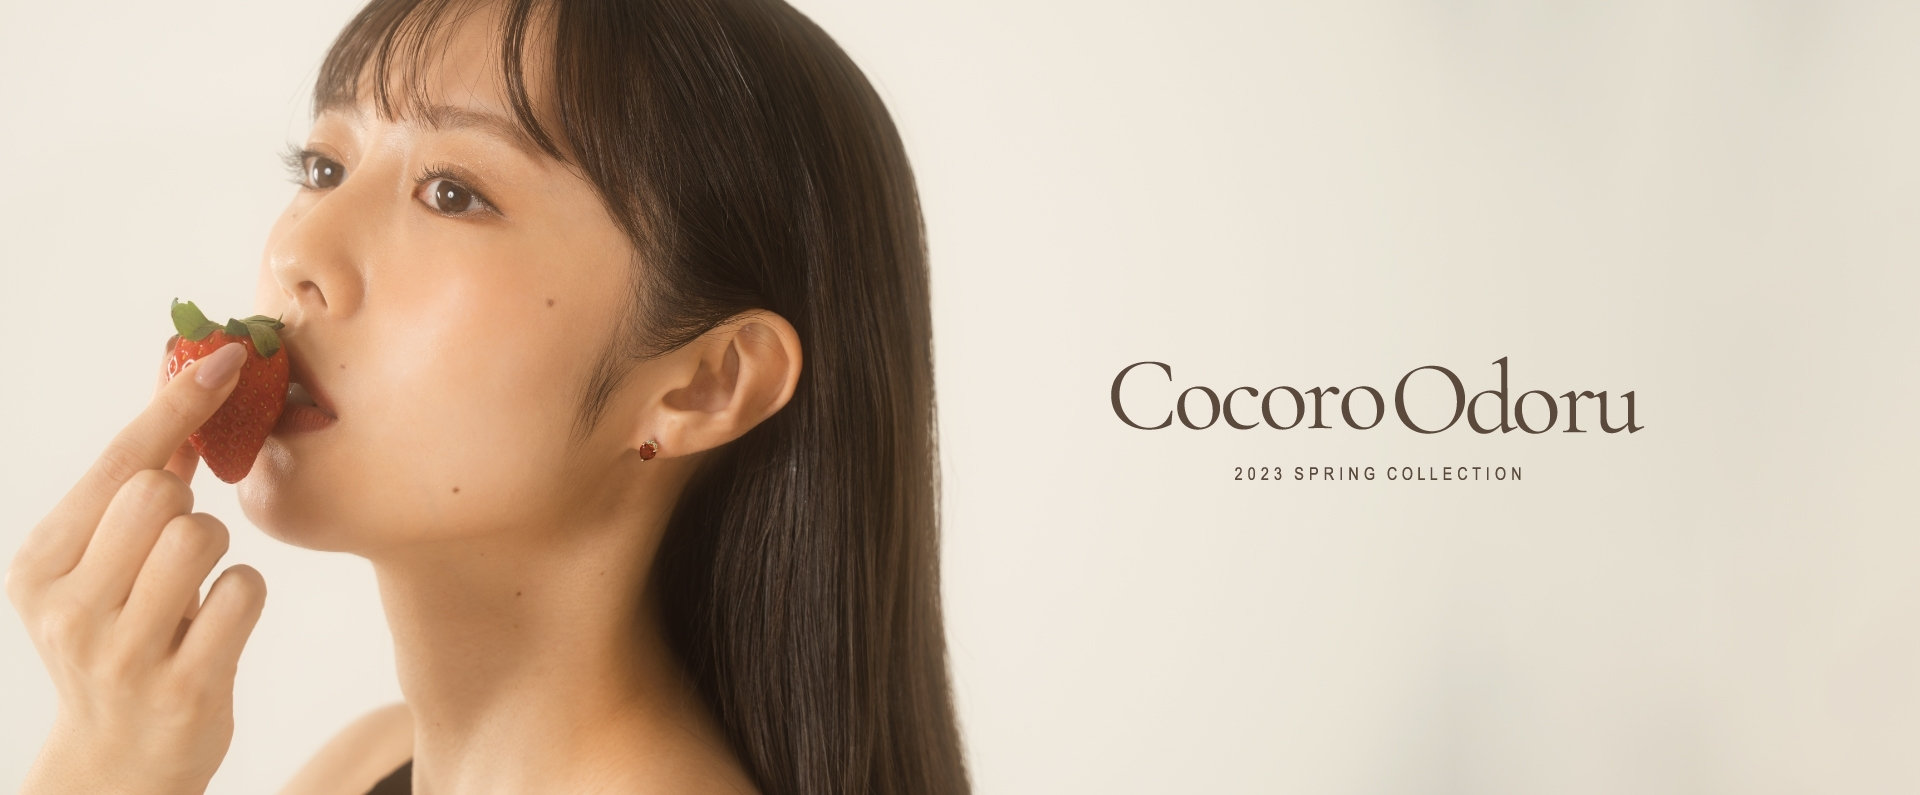 Cocoro Odoru | SPRING COLLECTION 2023